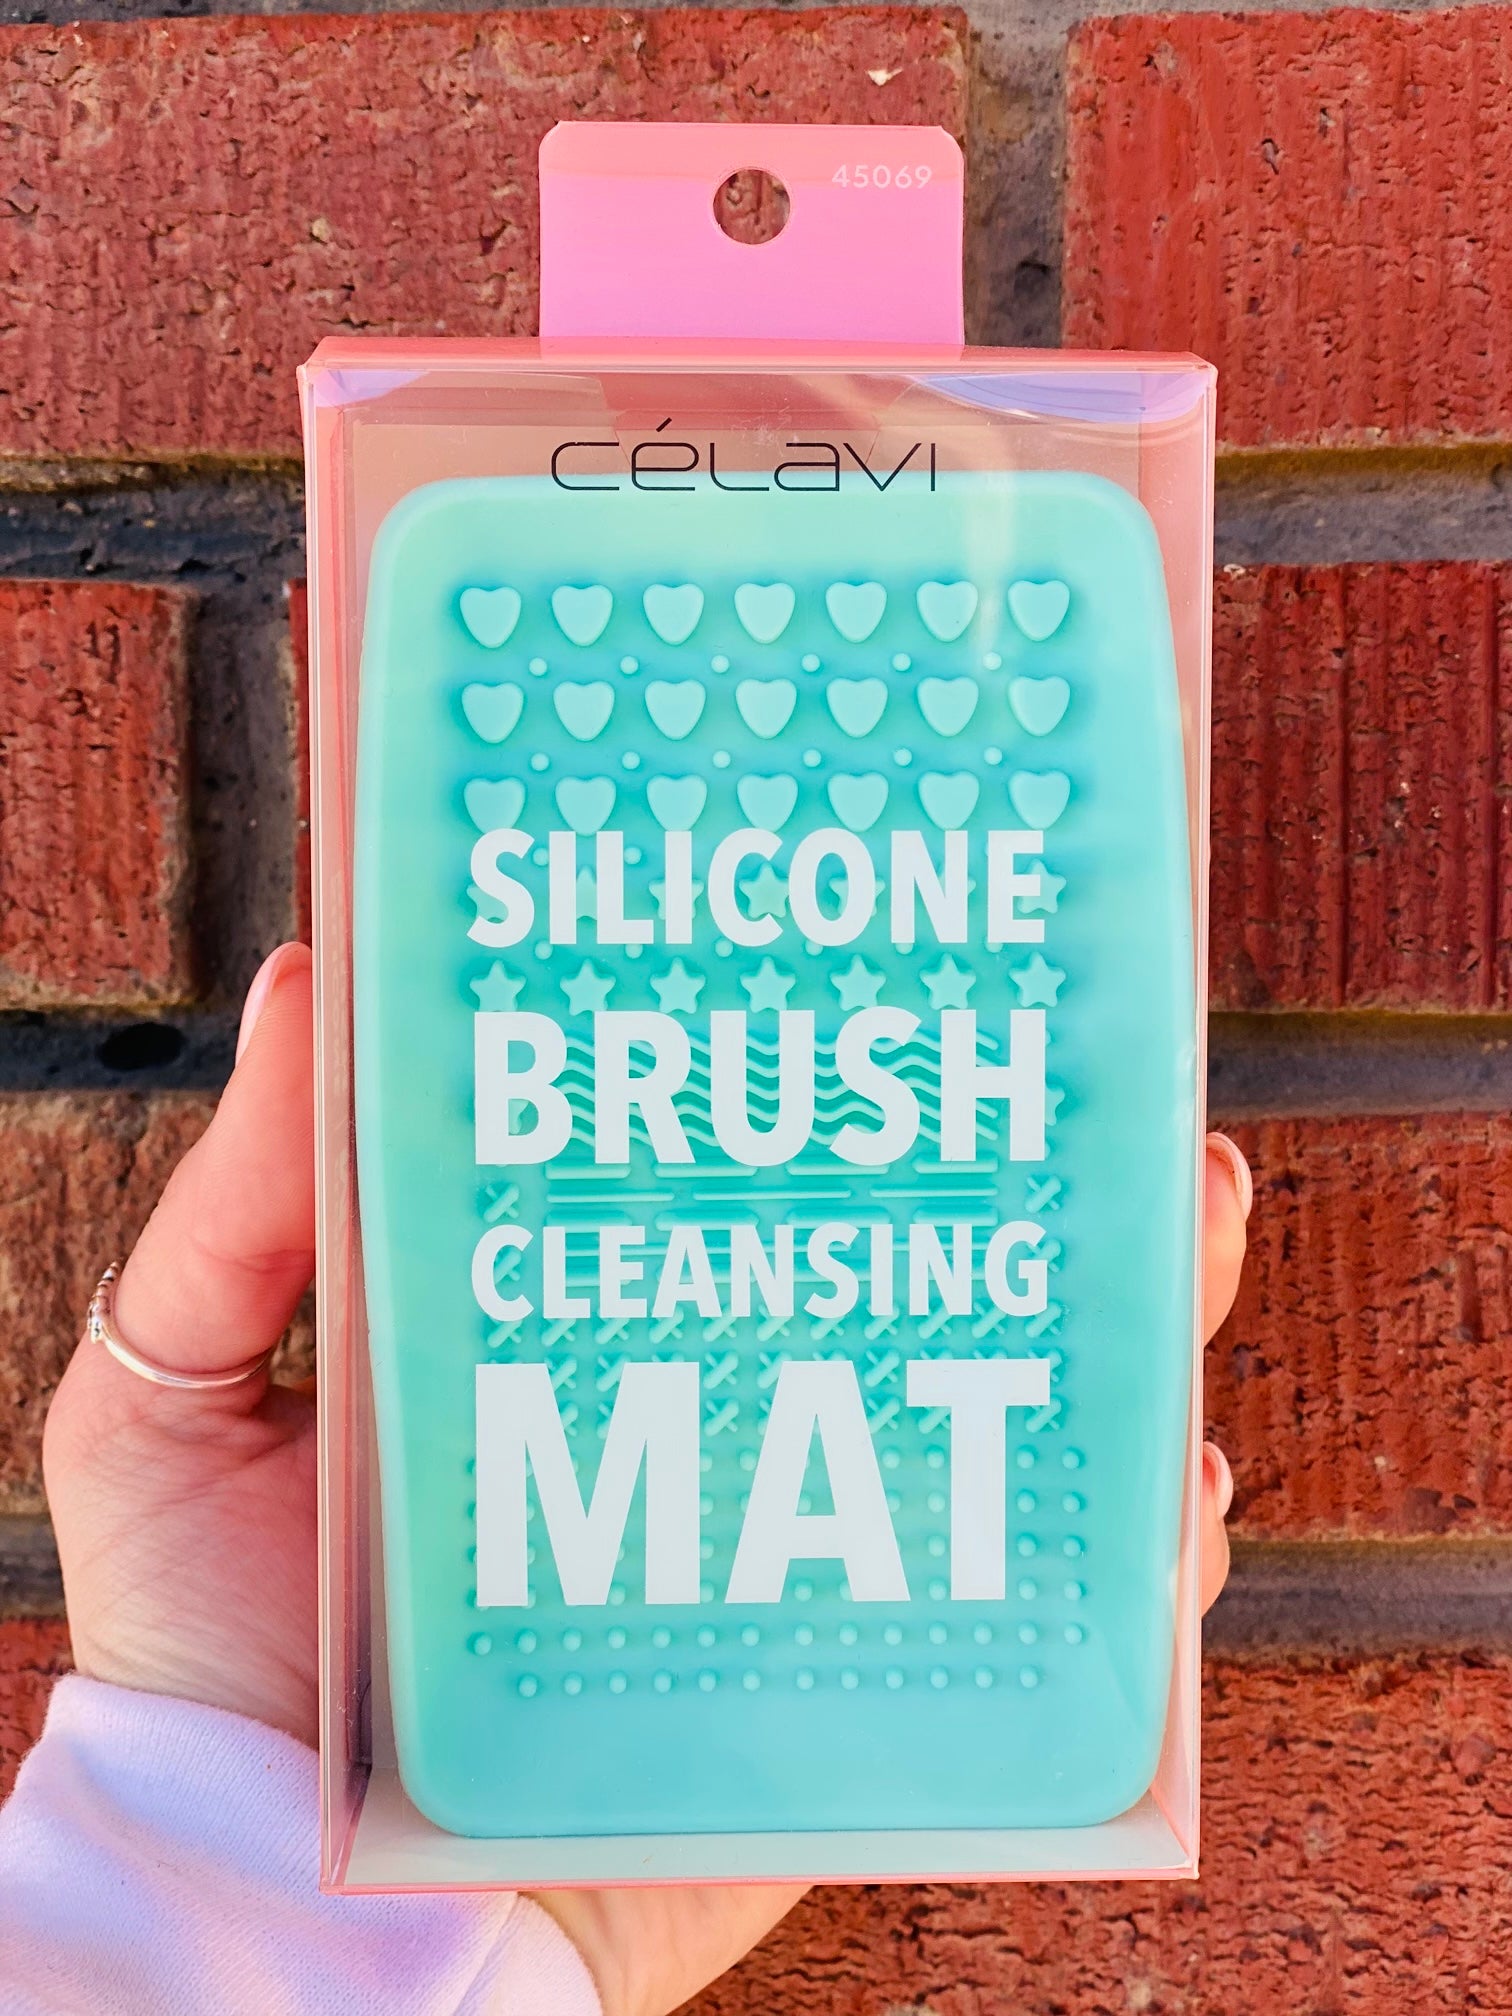 Teal Celavi Silicone Brush Cleansing Mat